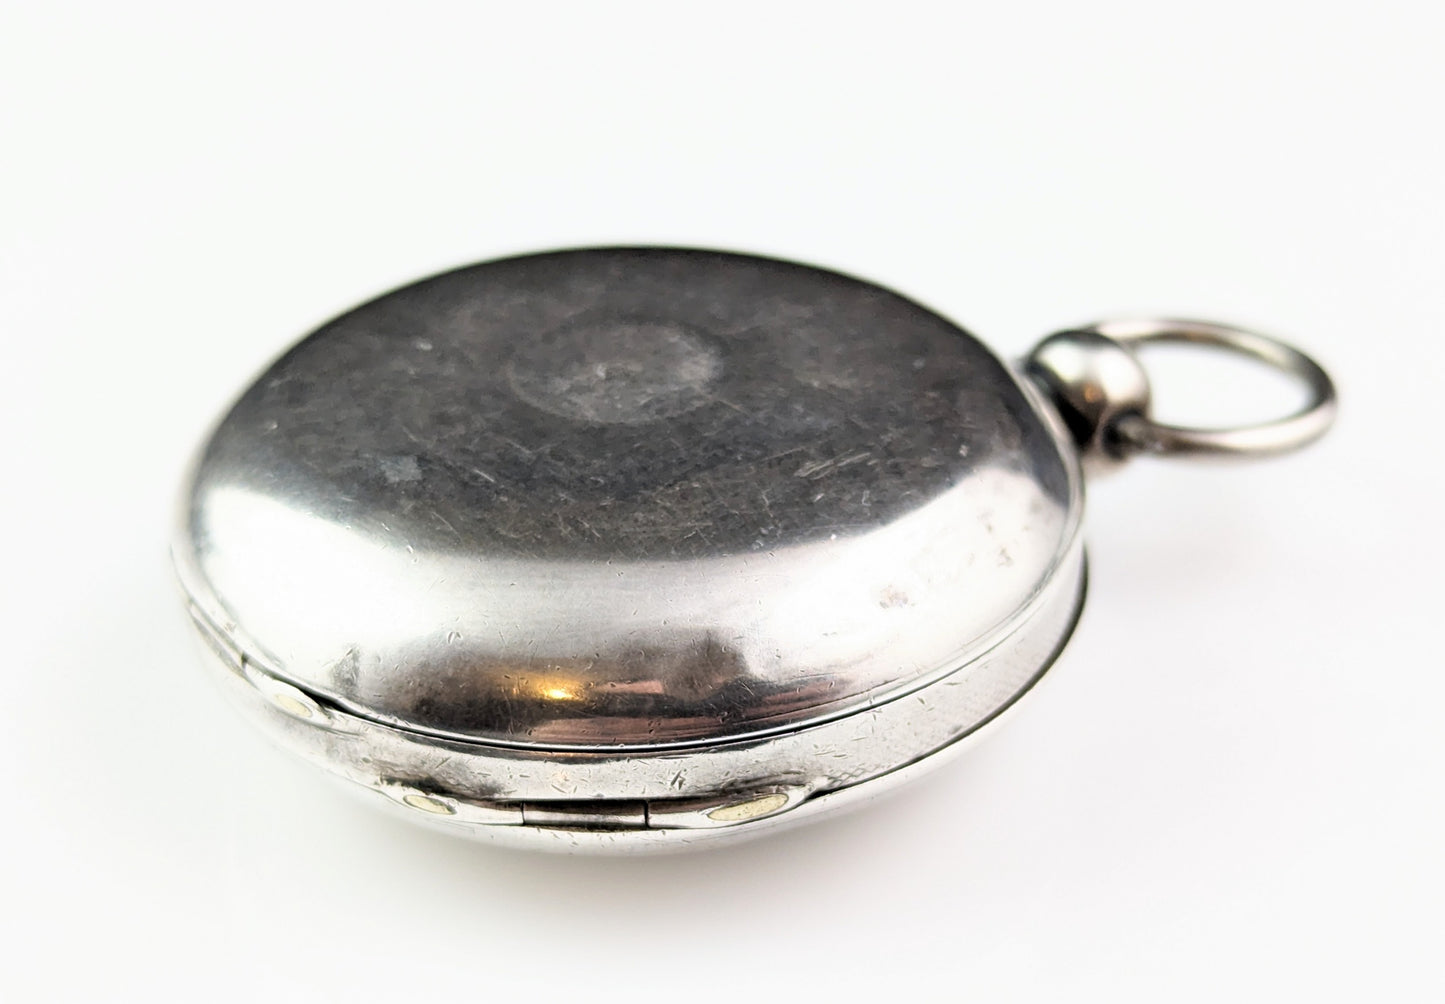 Antique Regency Sterling silver Full hunter pocket watch, Fusee movement